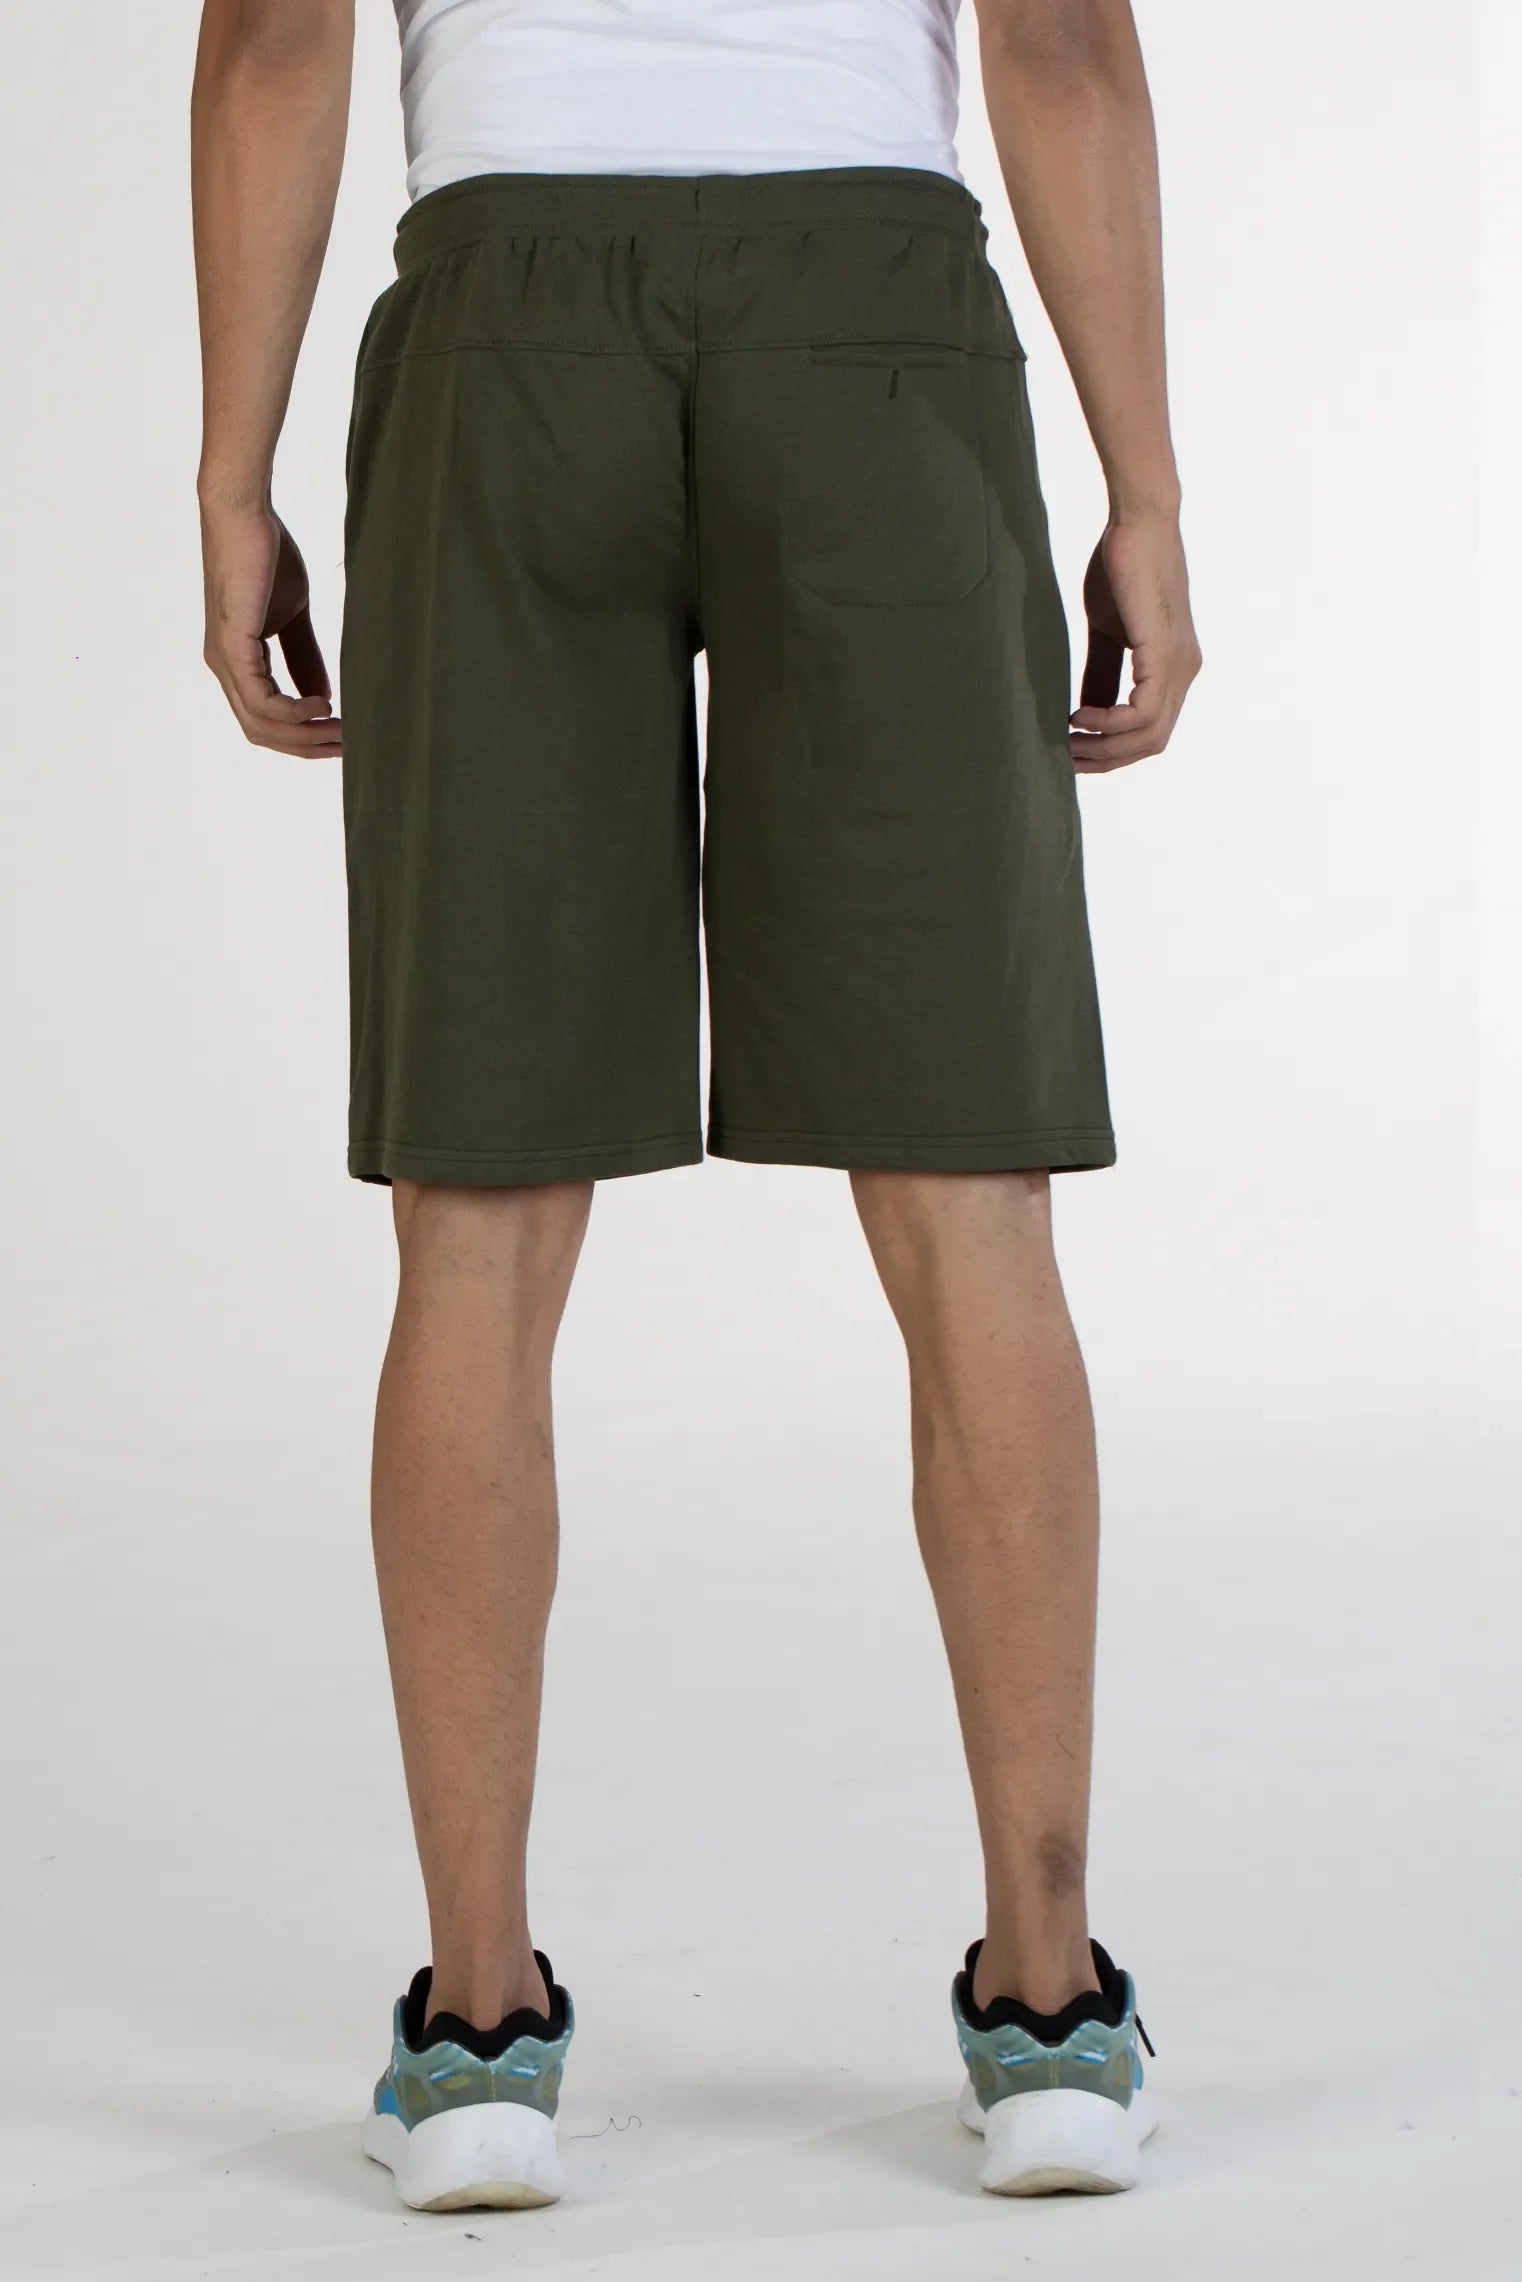 Olive solid knit cotton men's shorts